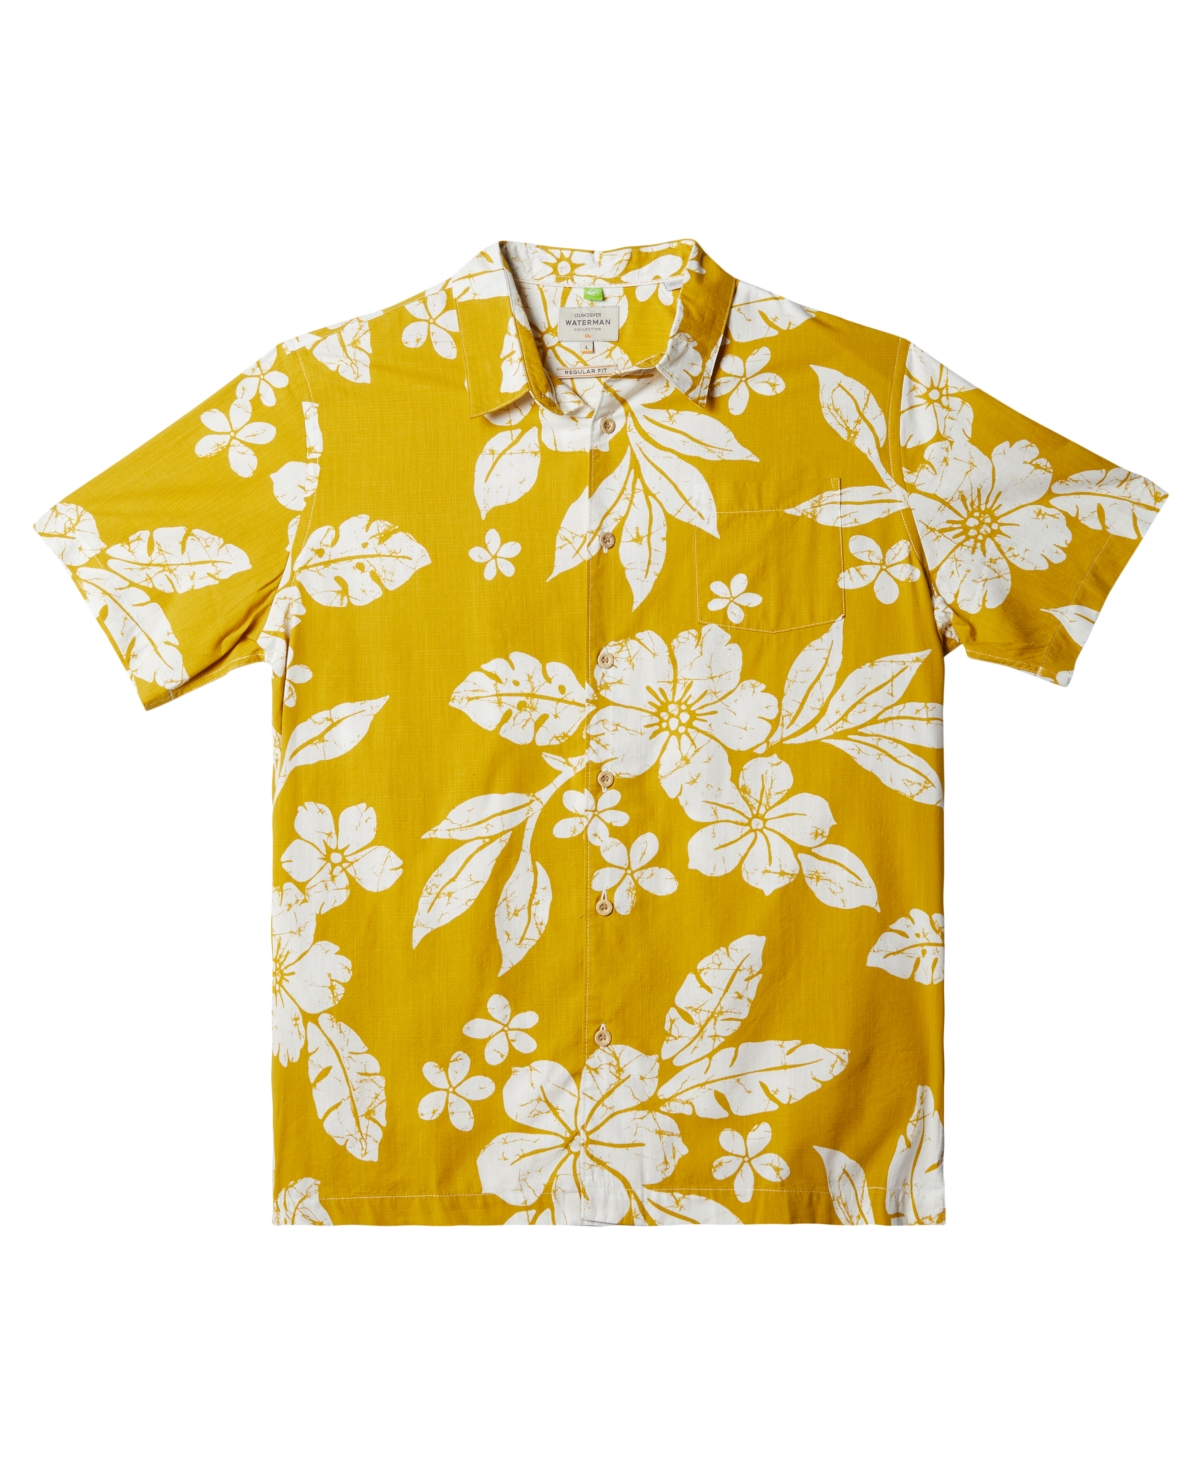 Men's Aqua Flower Short Sleeves Shirt - Seaport Aqua Flowers